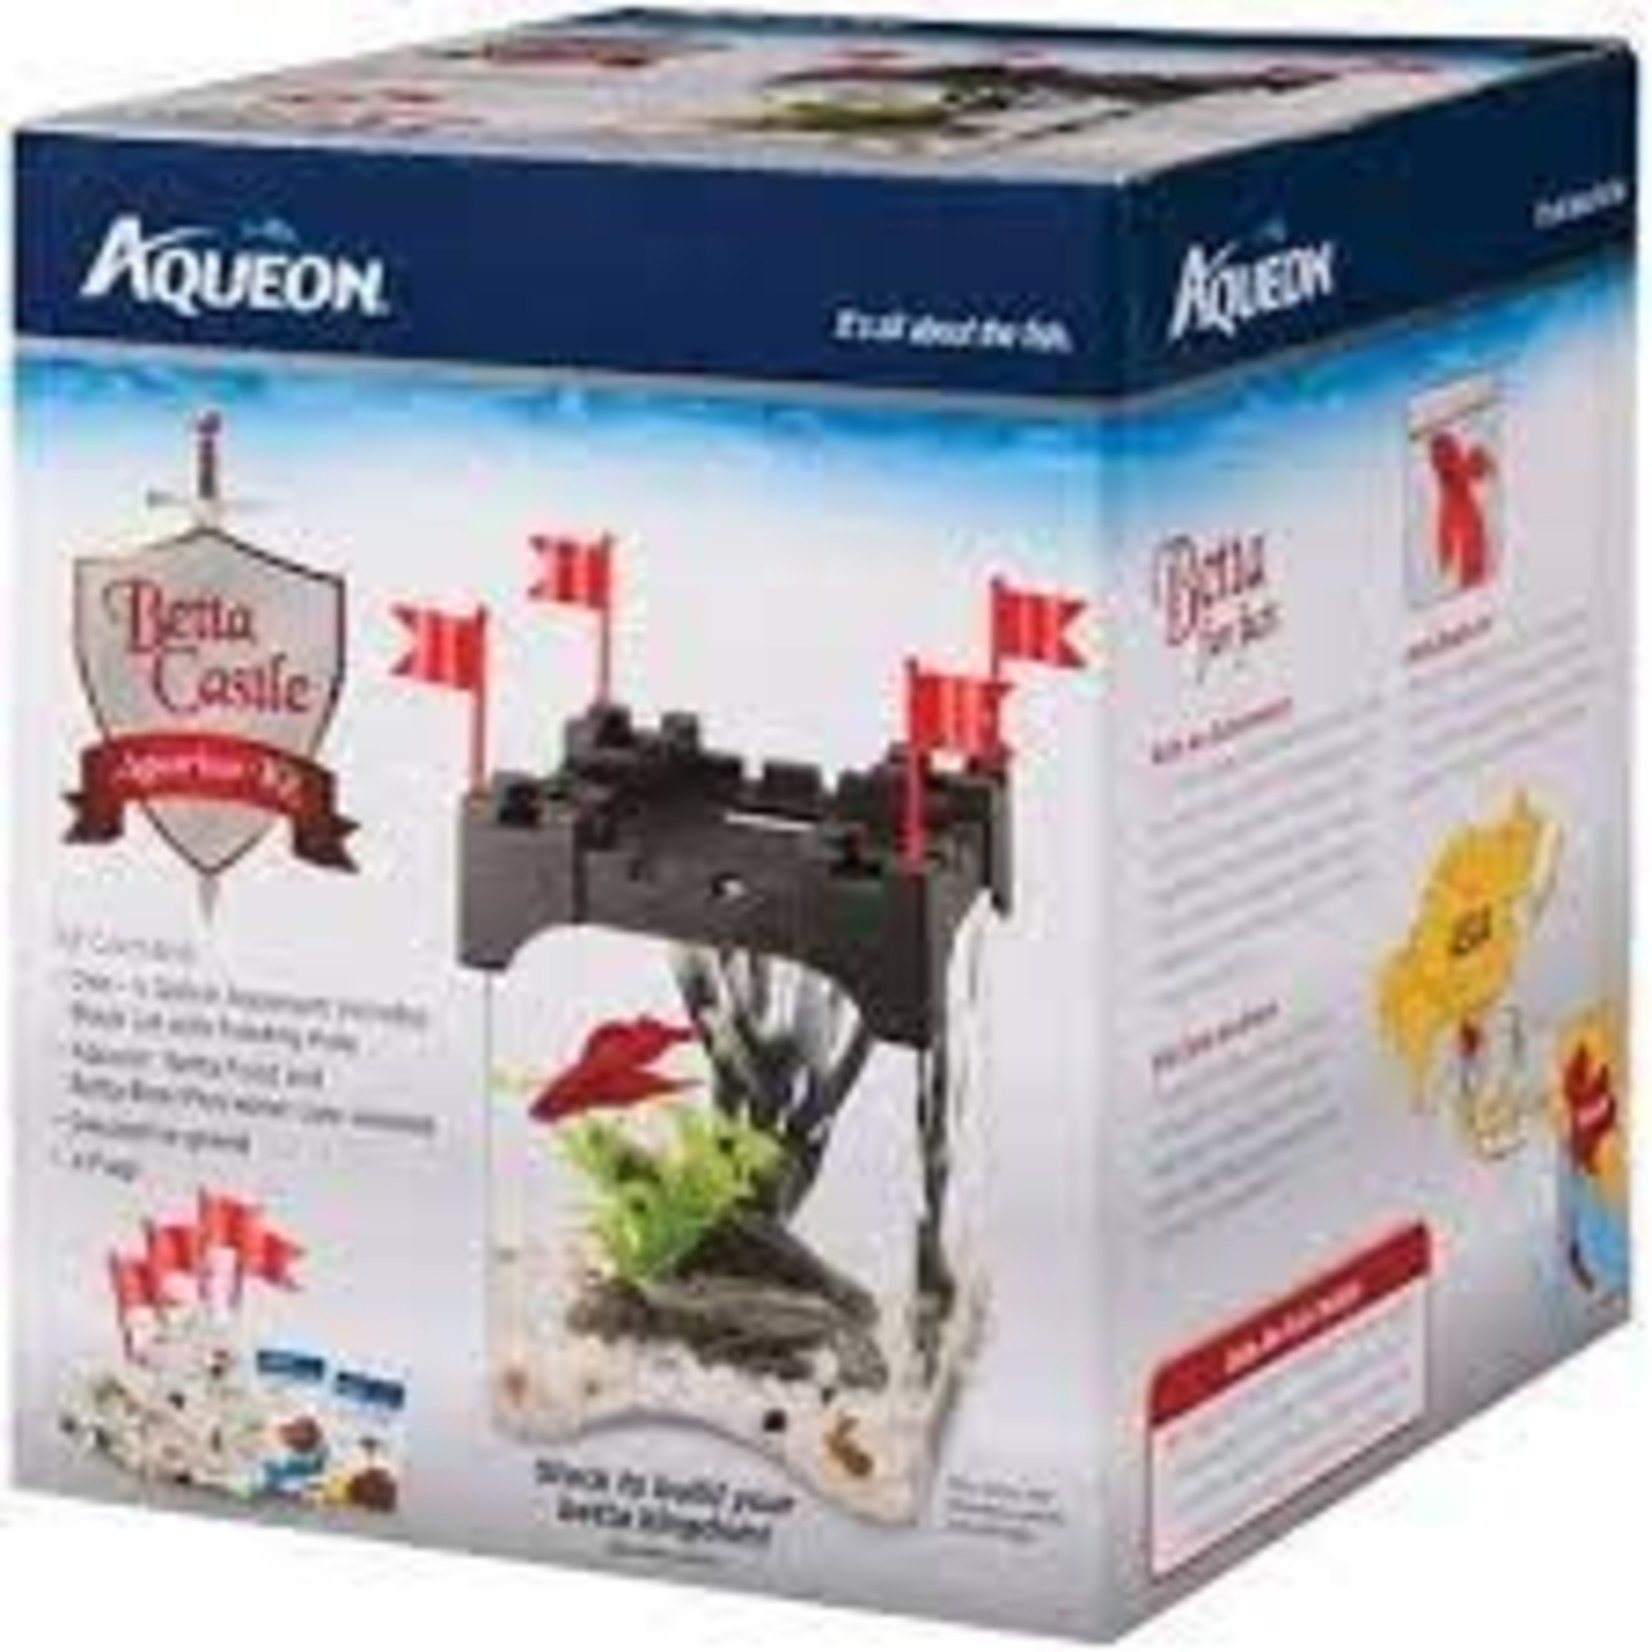 AQUEON Aqueon Betta Castle kit